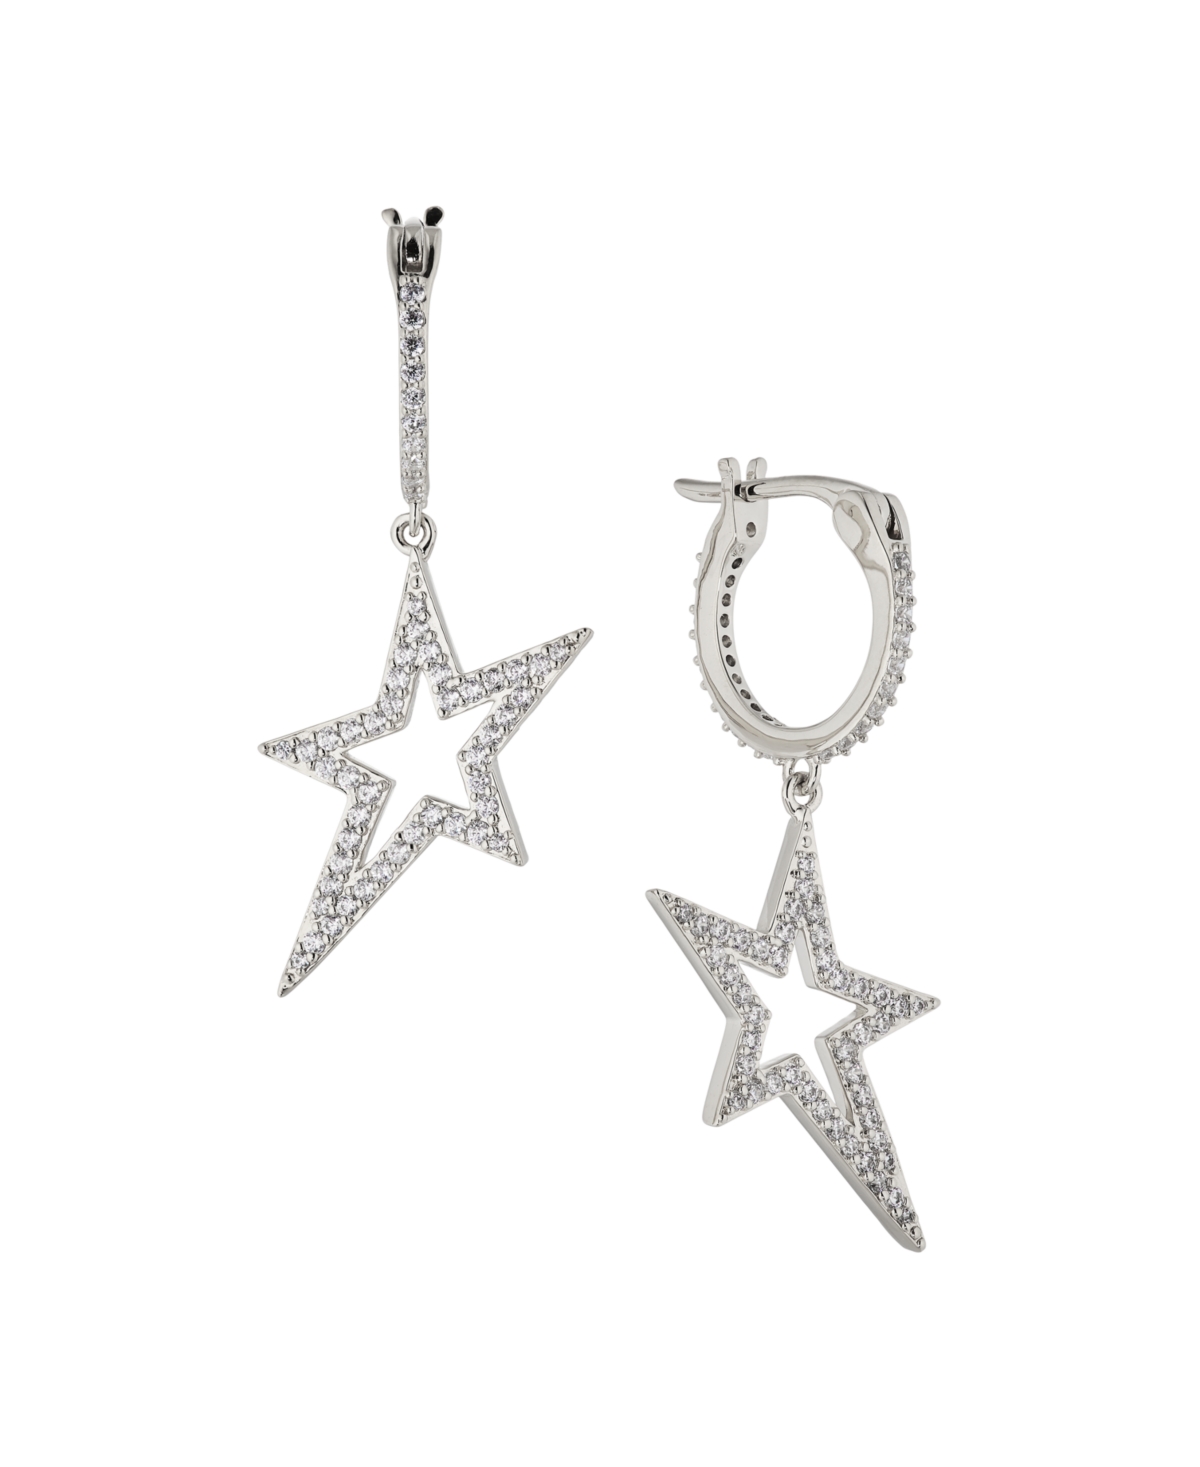 Ava Nadri Small Hoop With Star Drop Earring In Silver-tone Brass